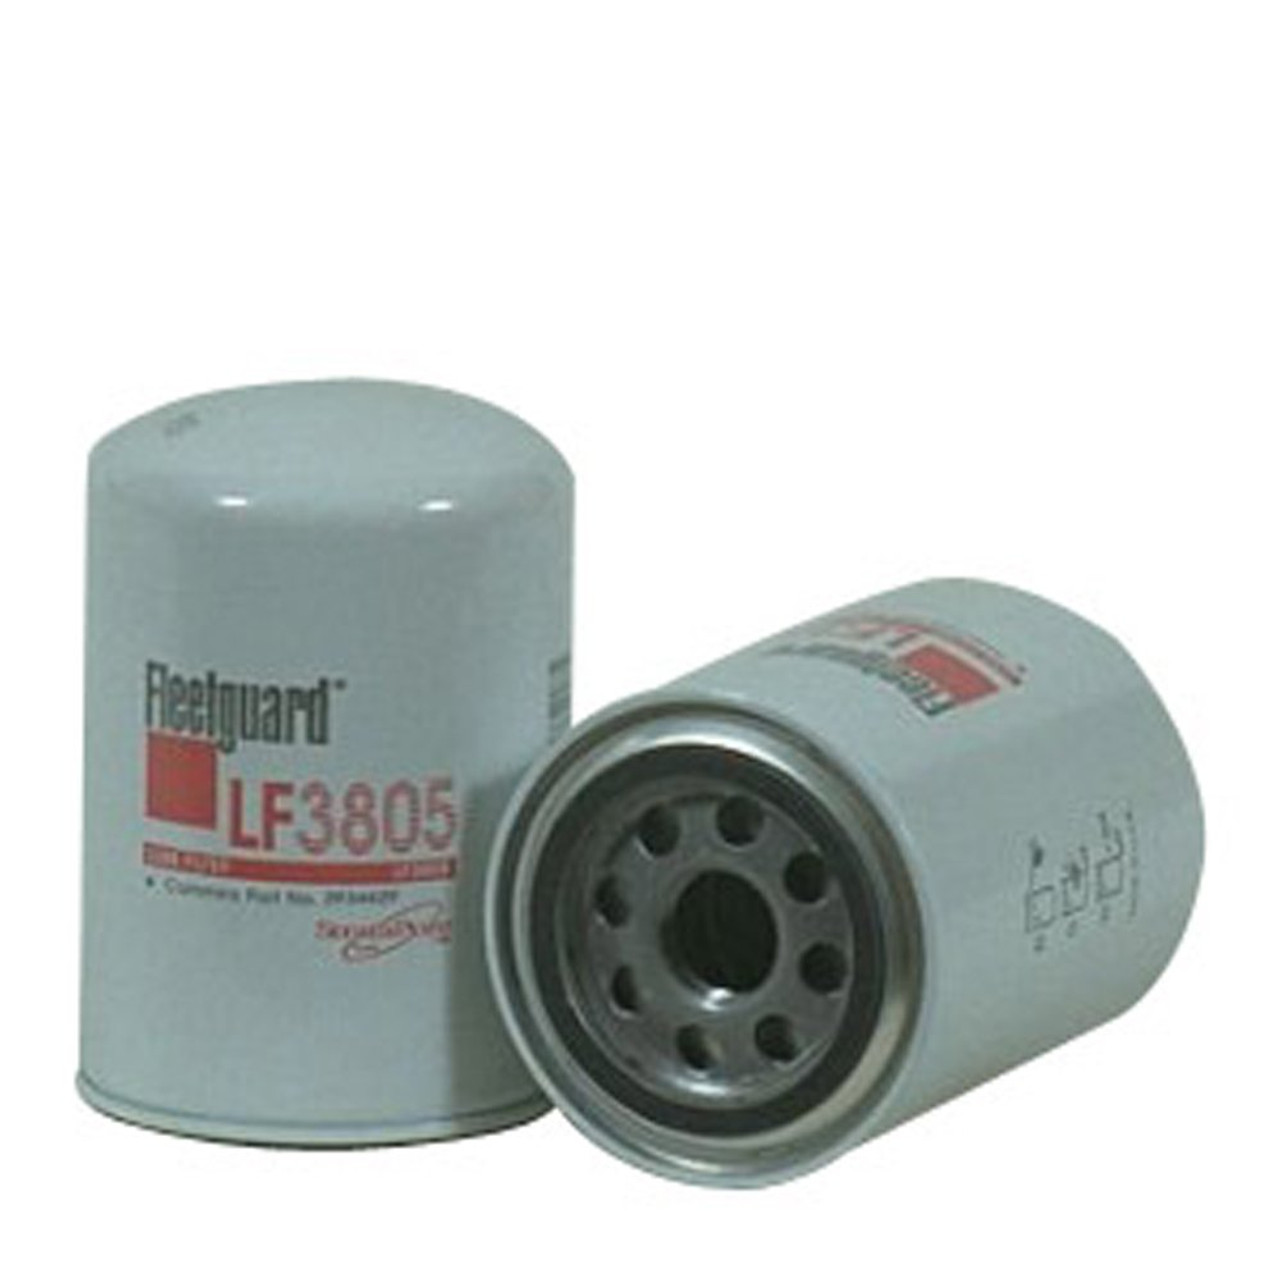 Fleetguard LF3805 Oil Filter Cellulose SpinOn